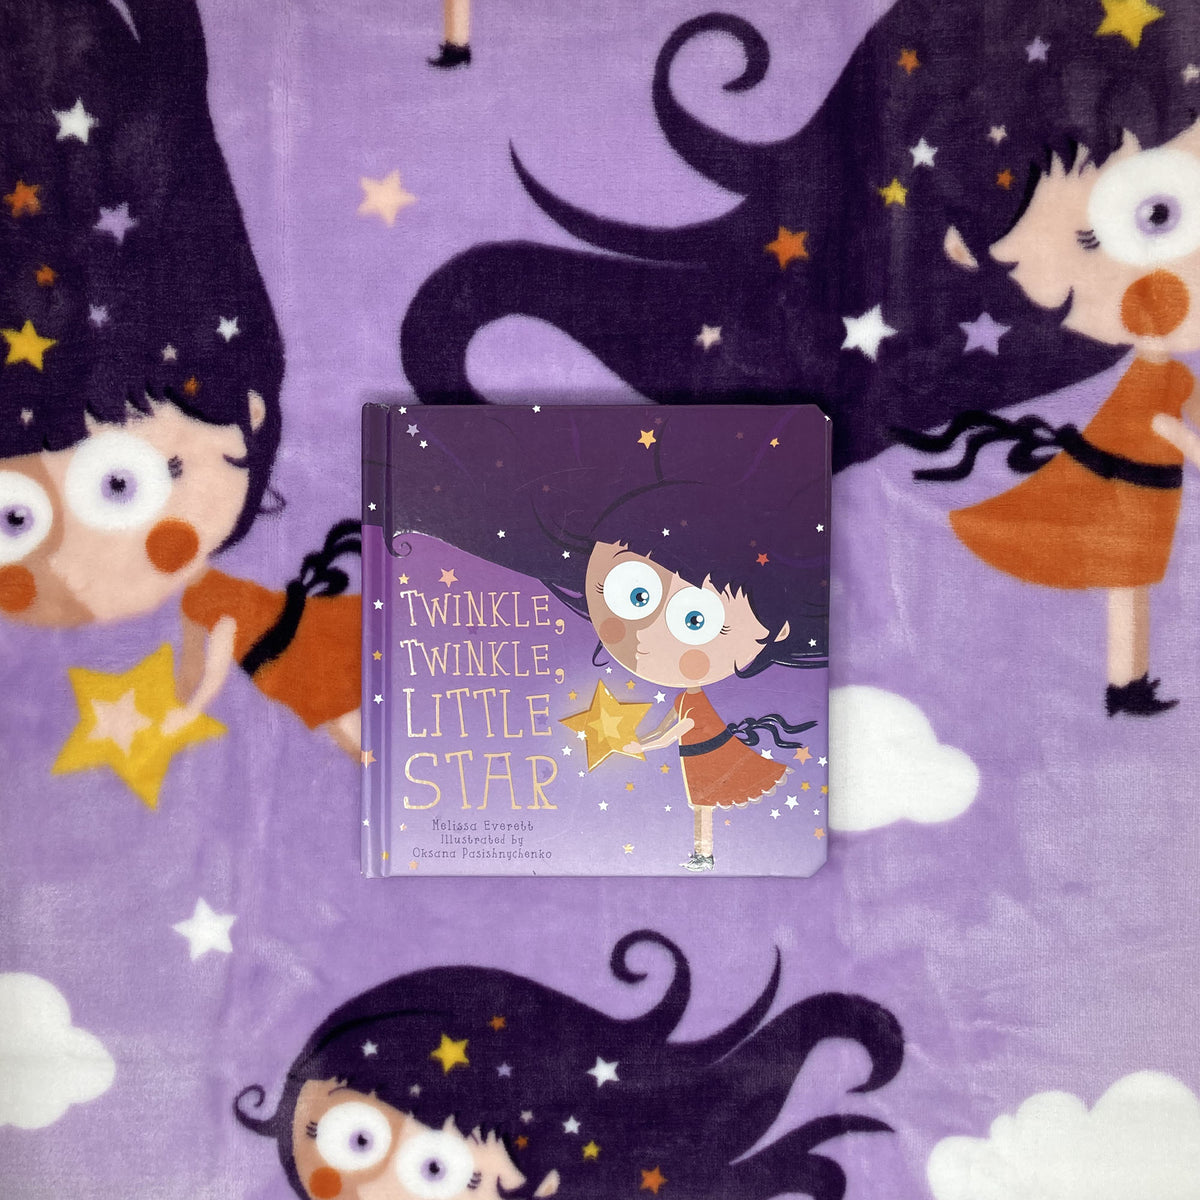 Twinkle Twinkle Little Star - Binks &amp; Books Blanket and Book Gift Set